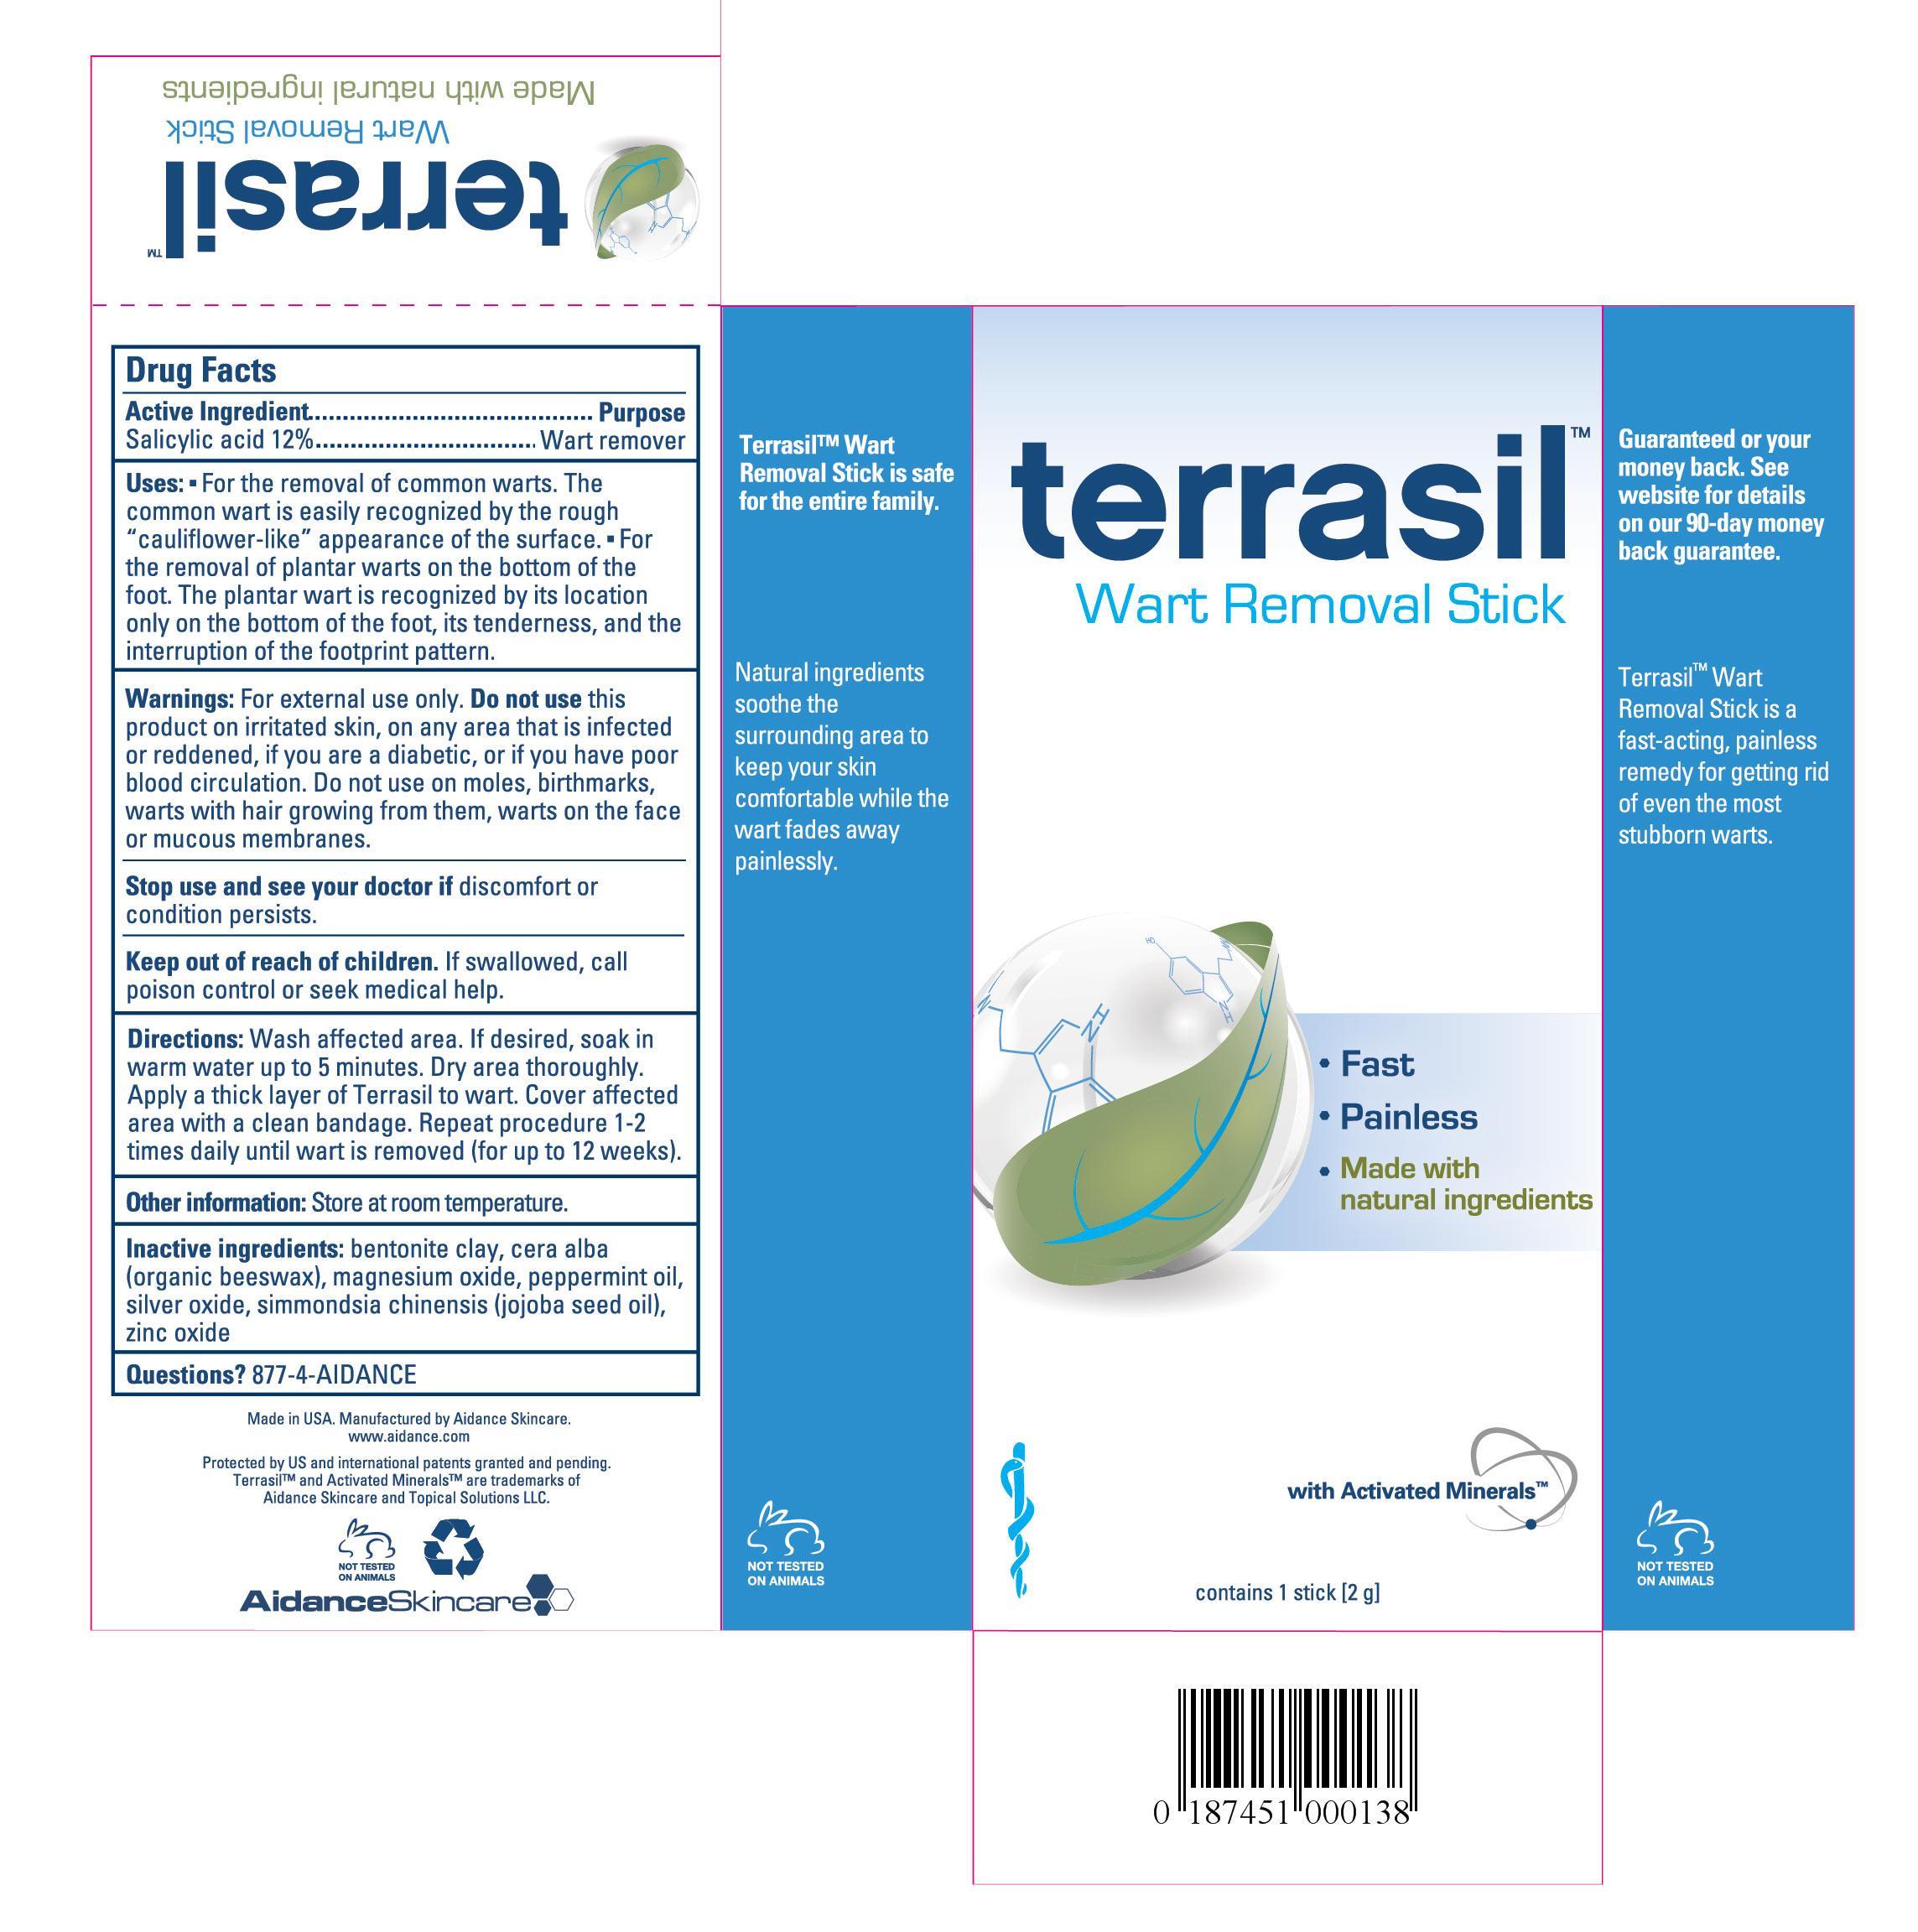 Terrasil Wart Removal (Salicylic Acid ) Stick [Aidance Skincare & Topical Solutions, Llc]